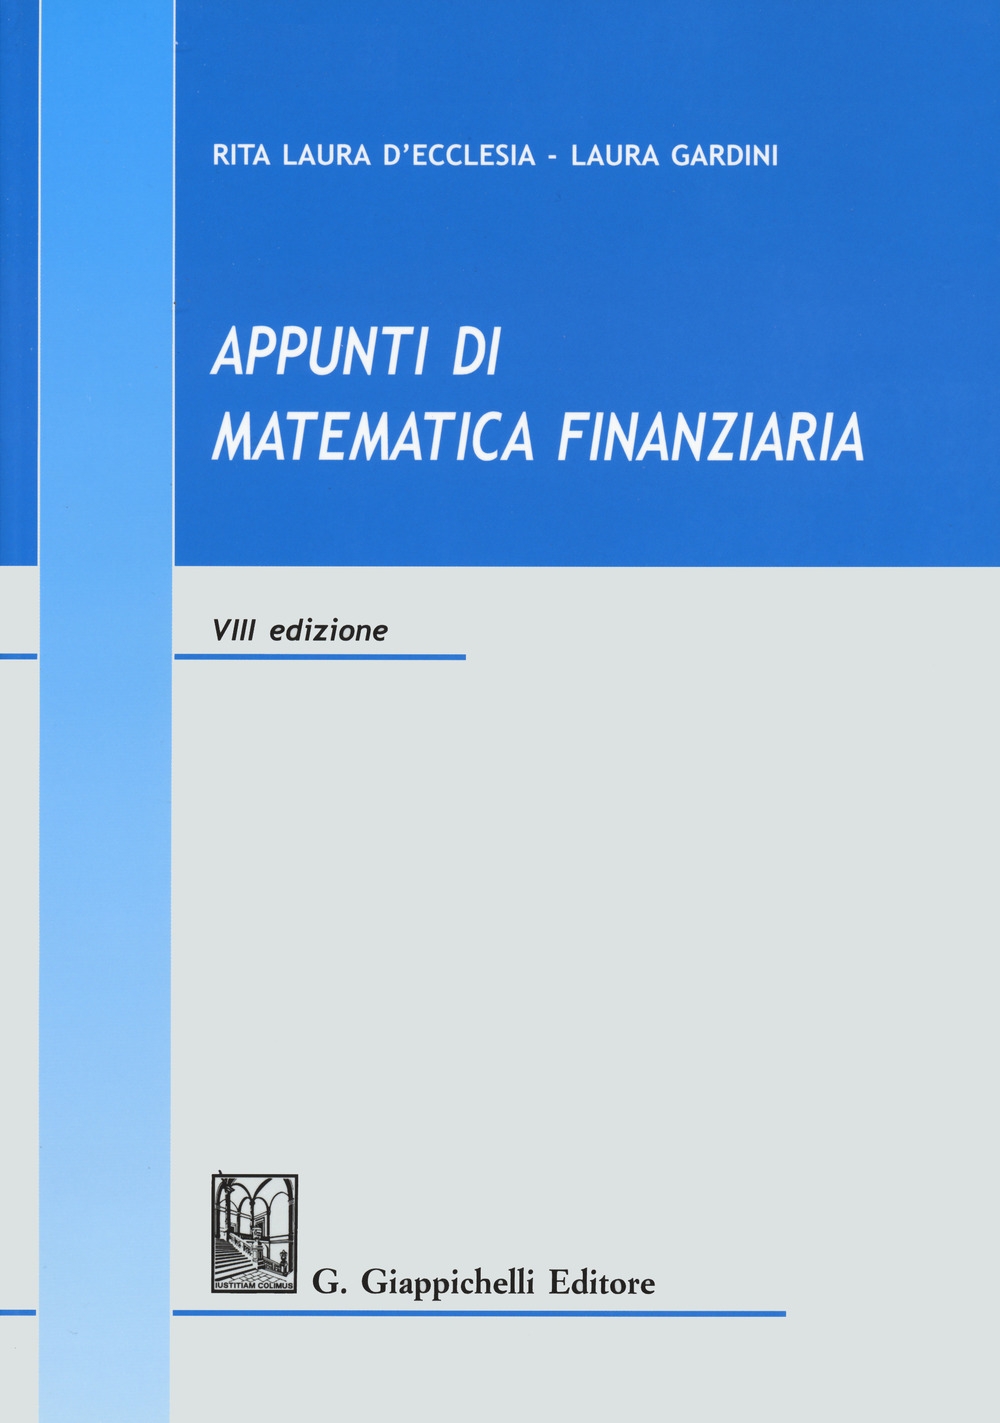 9788892130746 Laura Gardini; D'Ecclesia Rita Laura 2019 - Appunti di matematica  finanziaria 